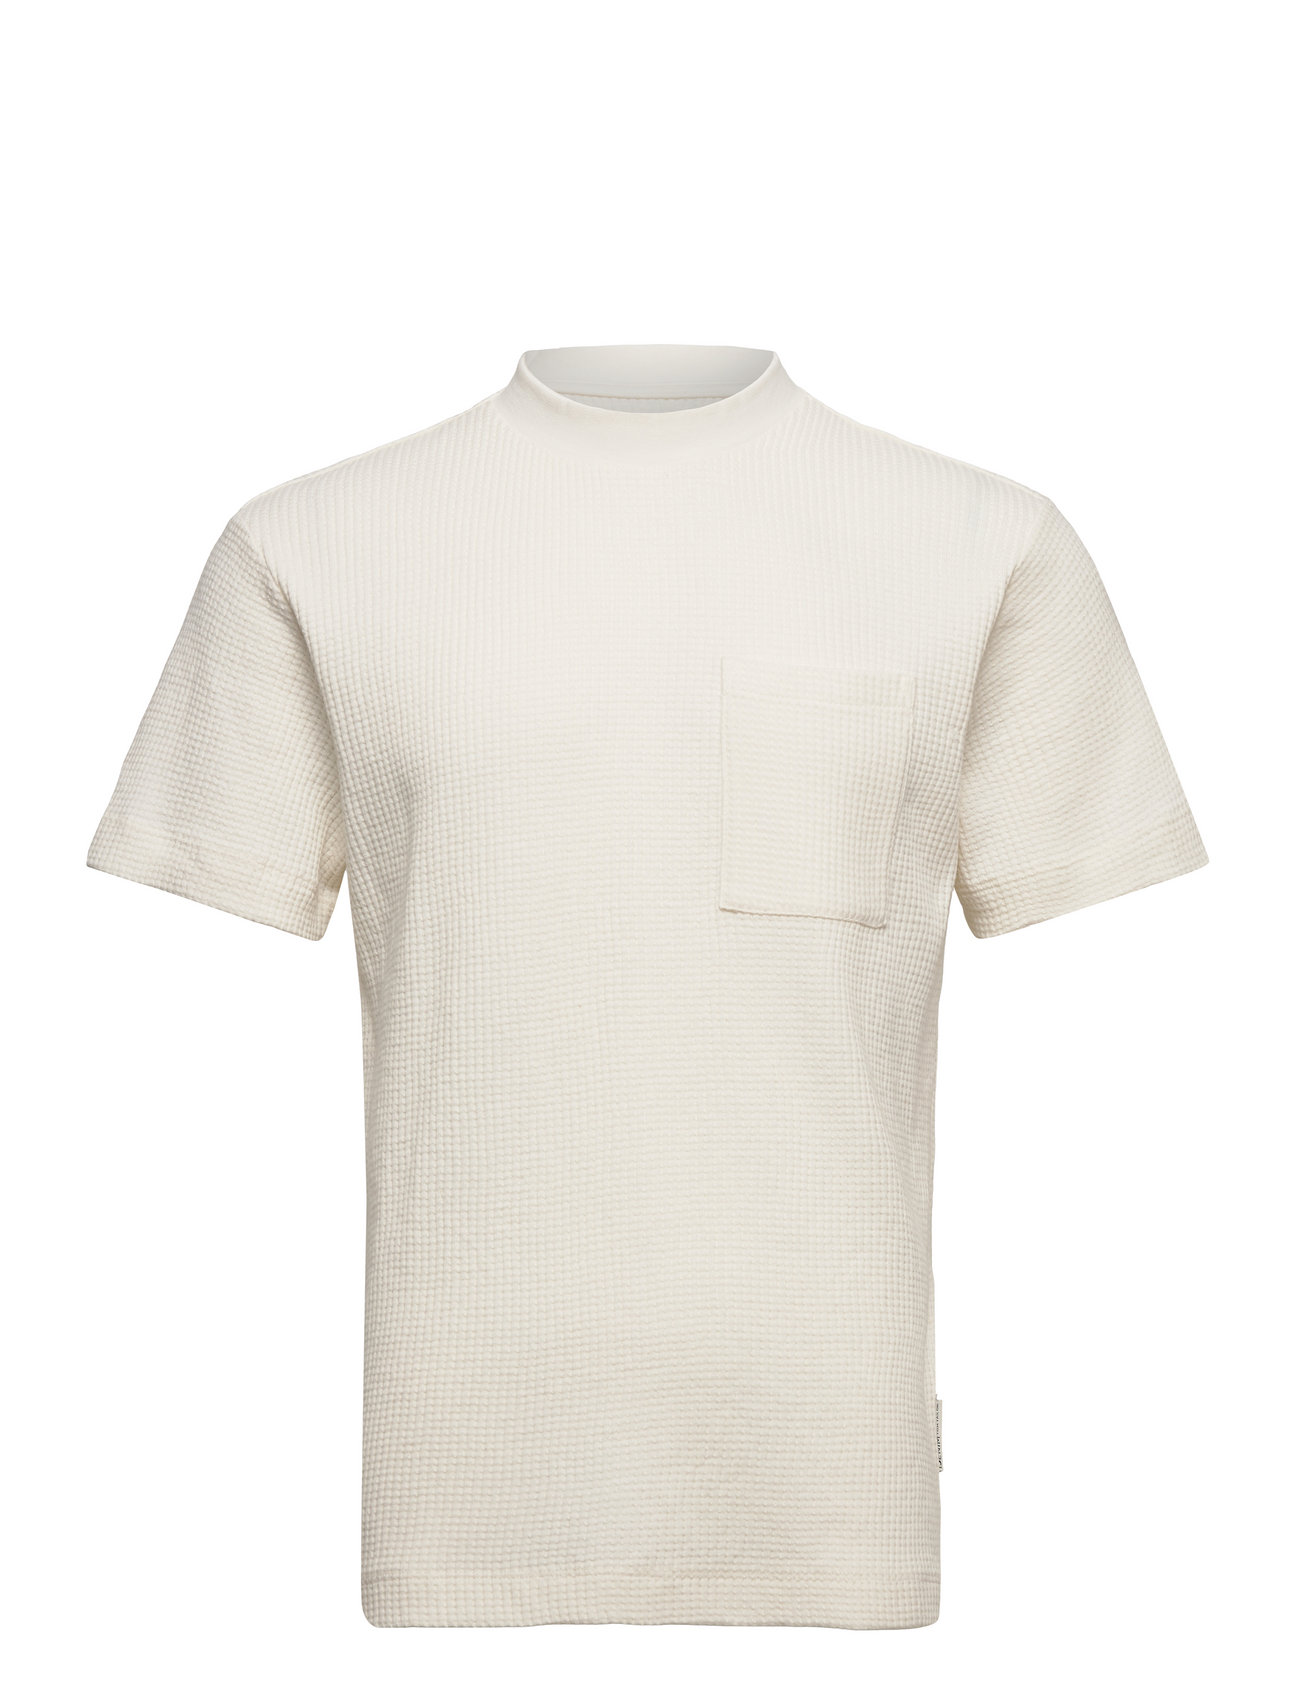 Louis Vuitton Damier T-shirt